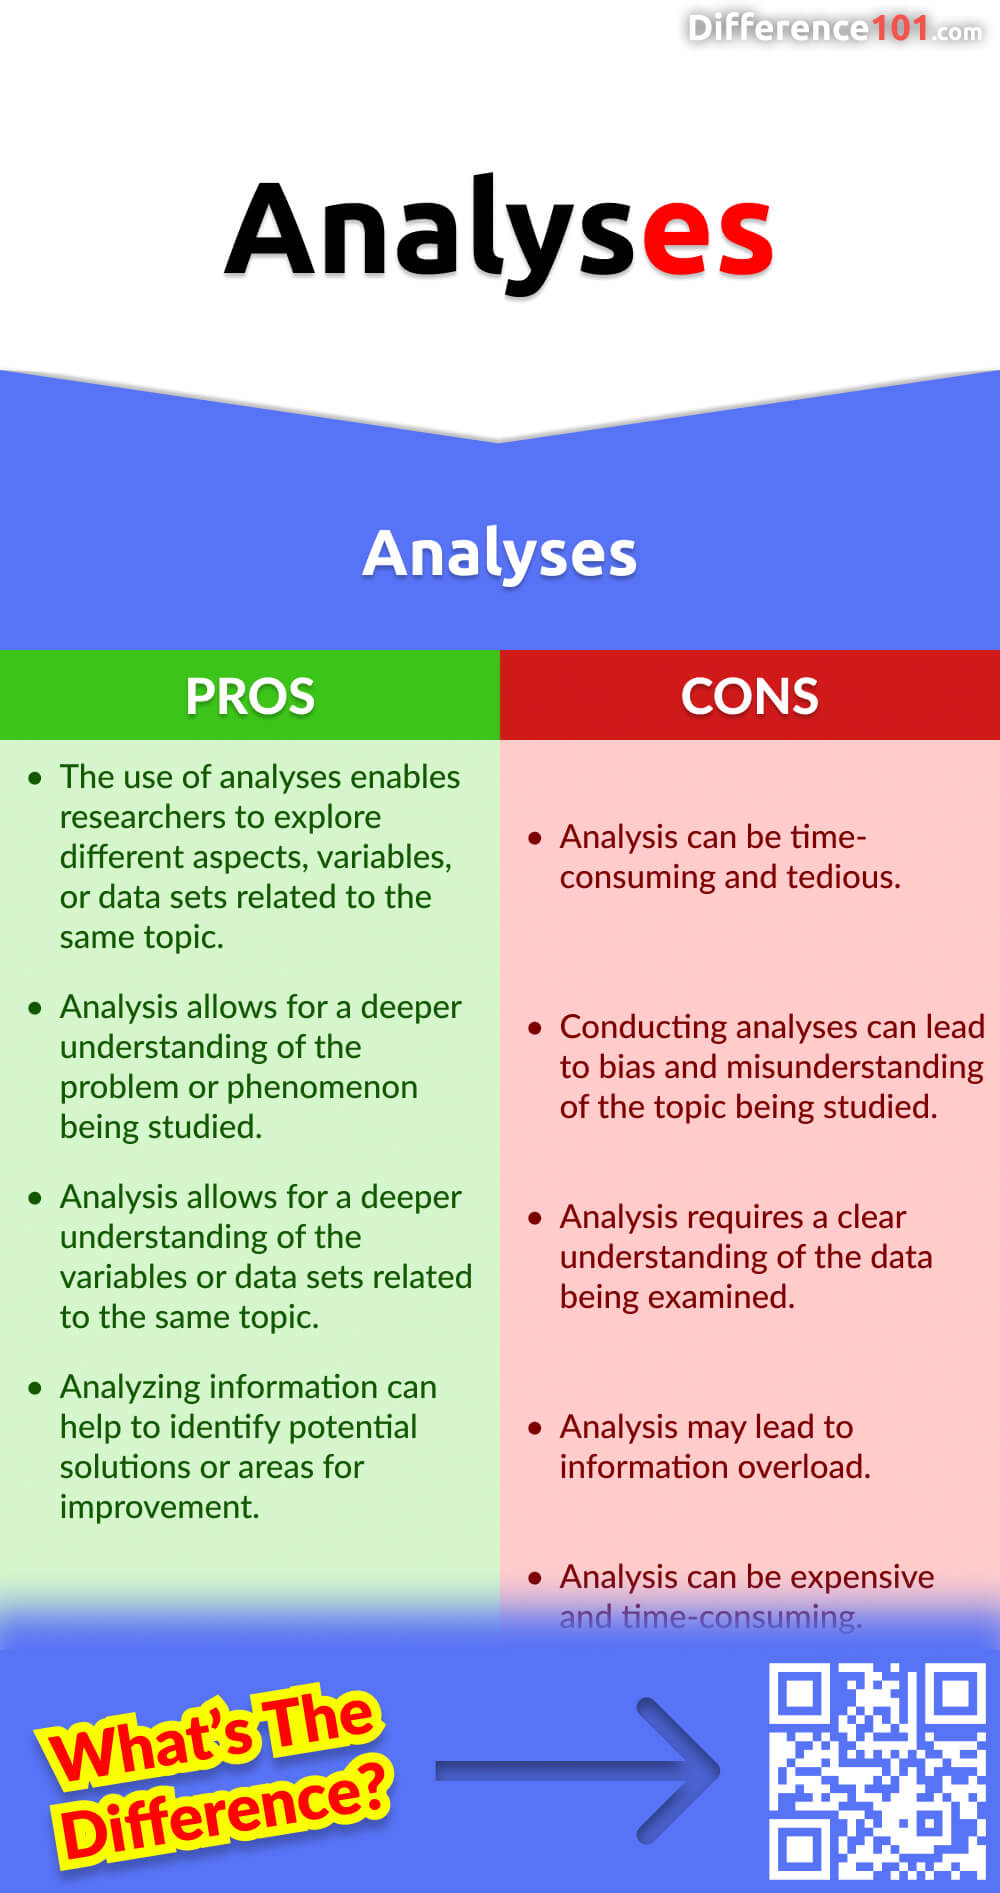 Analyses Pros & Cons